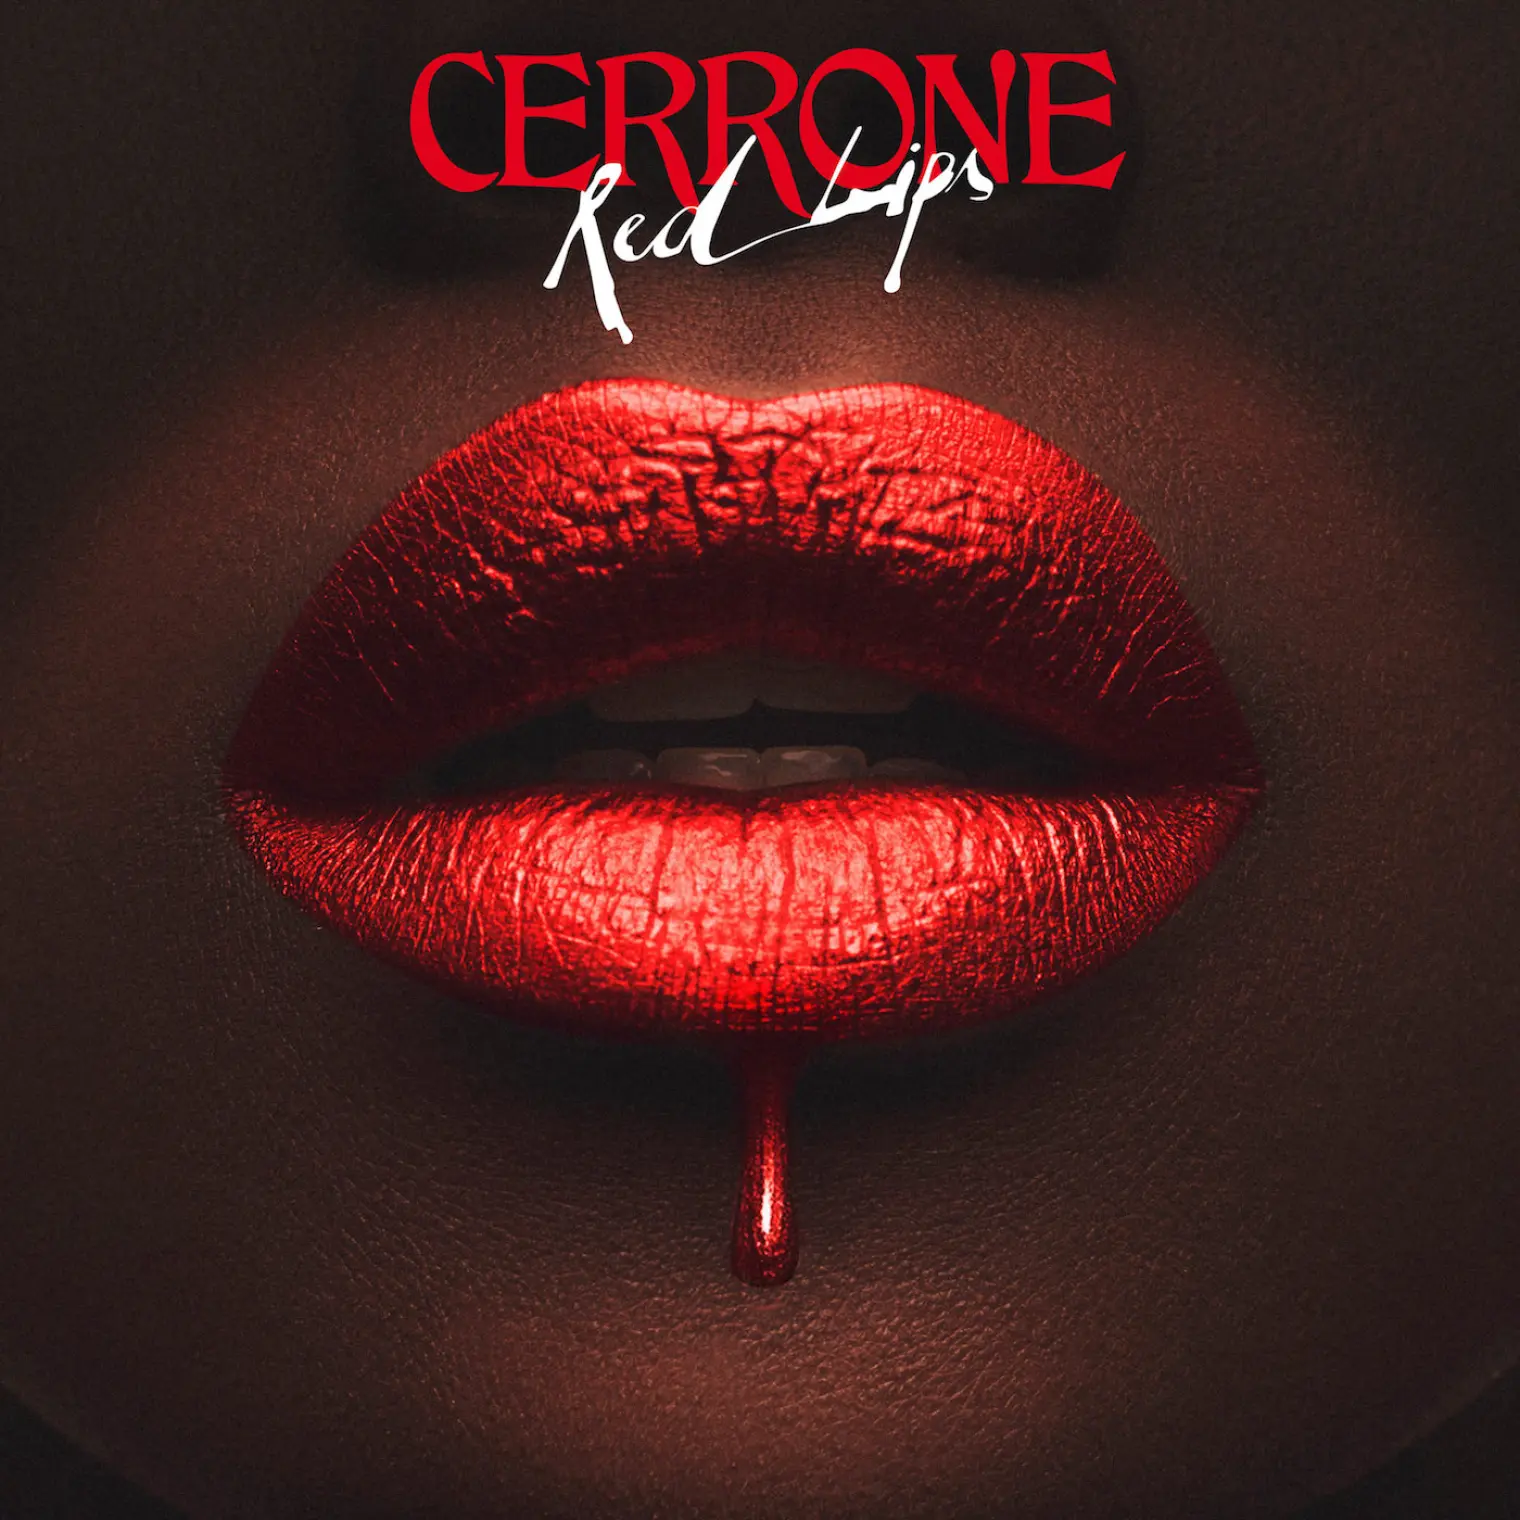 Red Lips -  Cerrone 